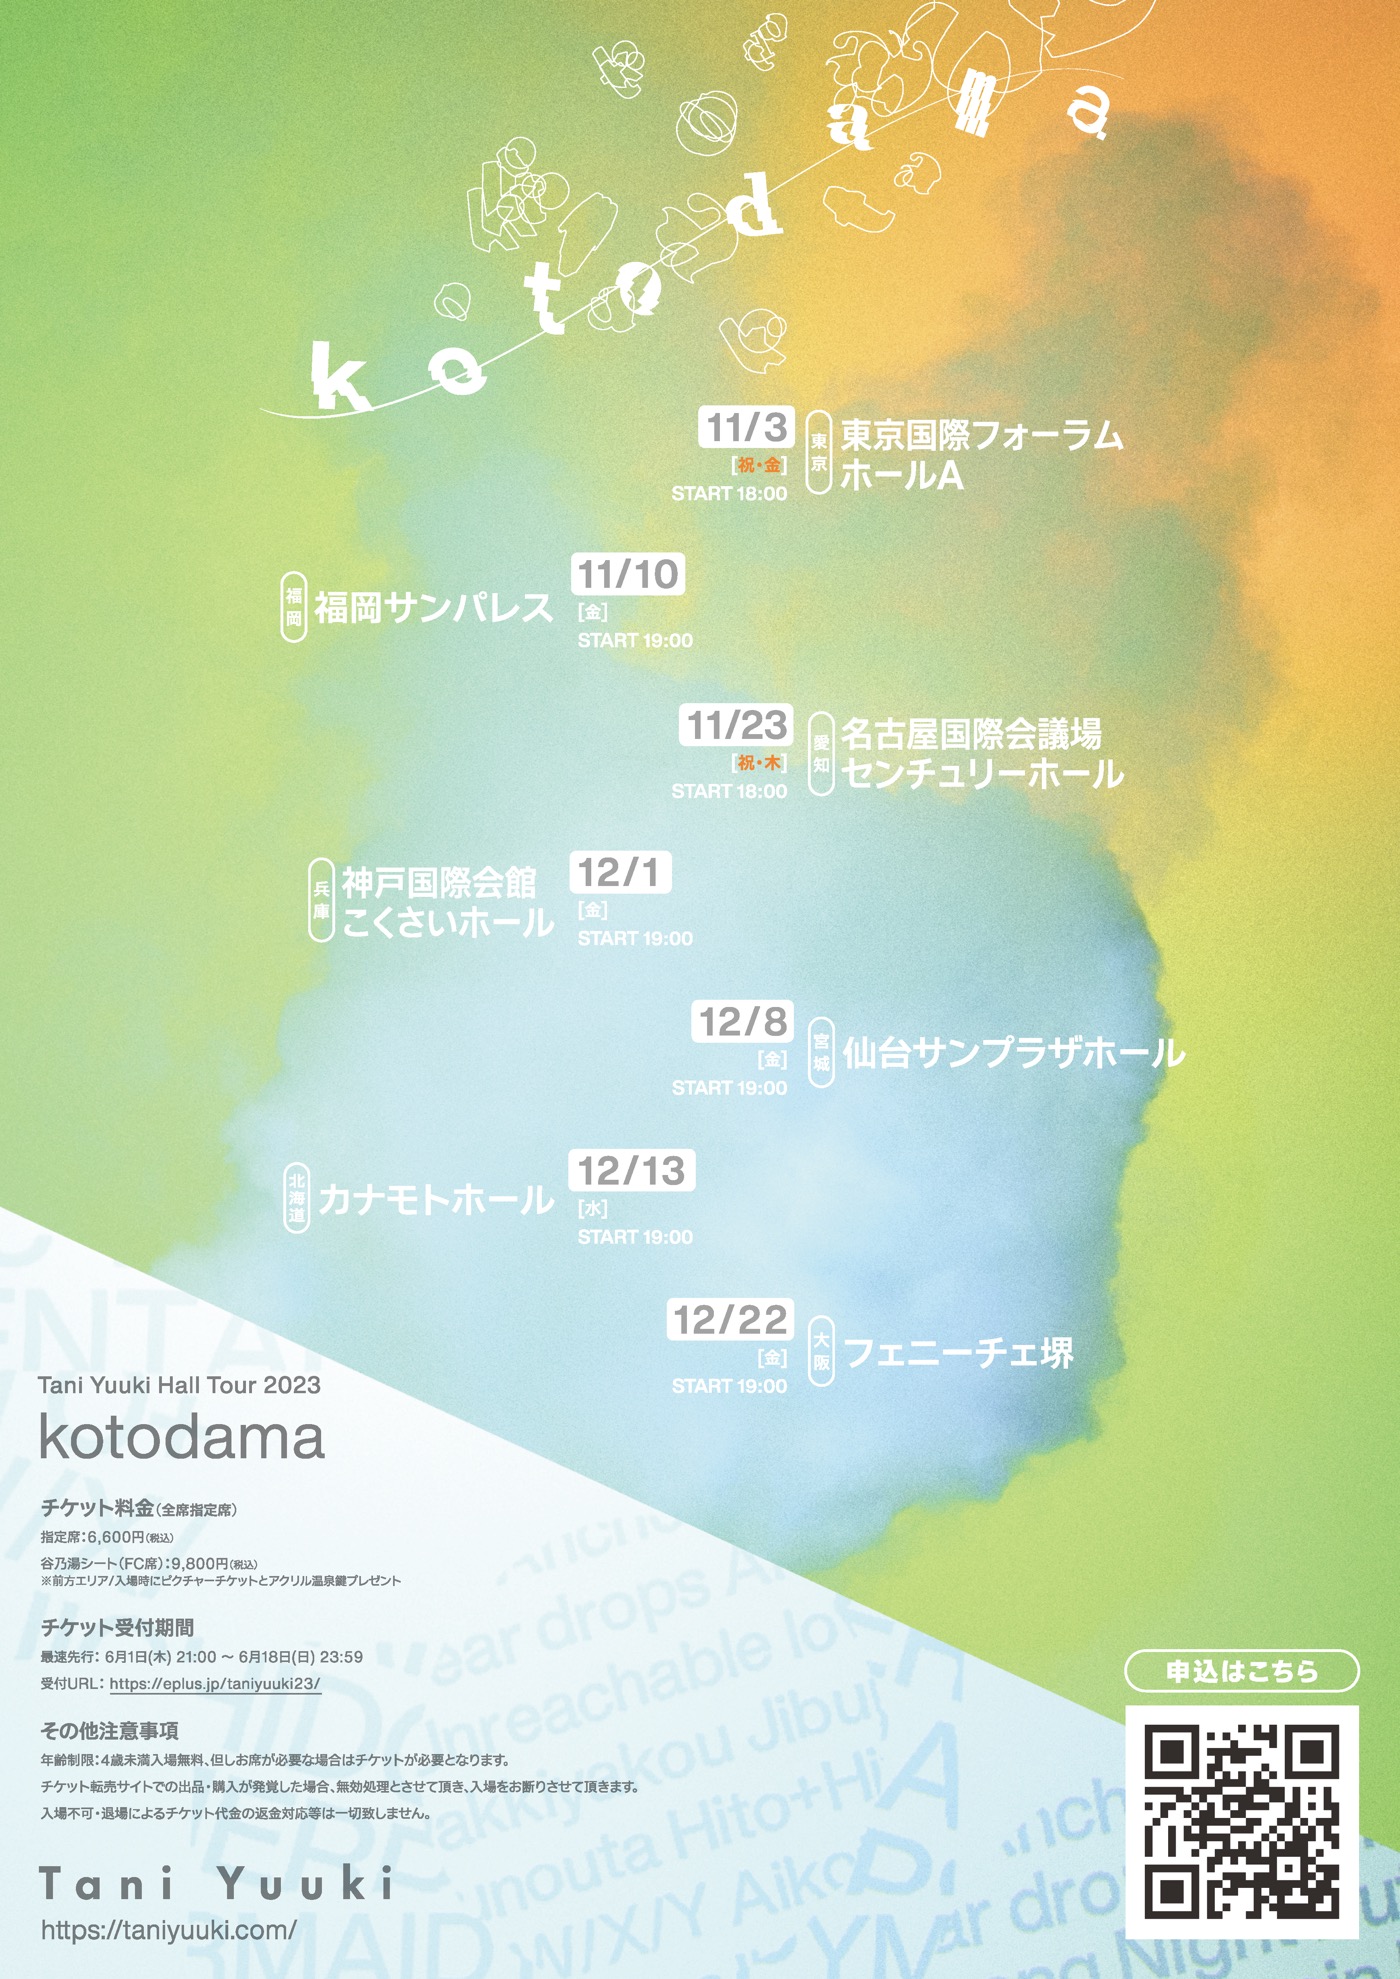 Tani Yuuki、自身初のホールツアー『Tani Yuuki Hall Tour 2023 “kotodama”』の開催を発表 - 画像一覧（3/6）